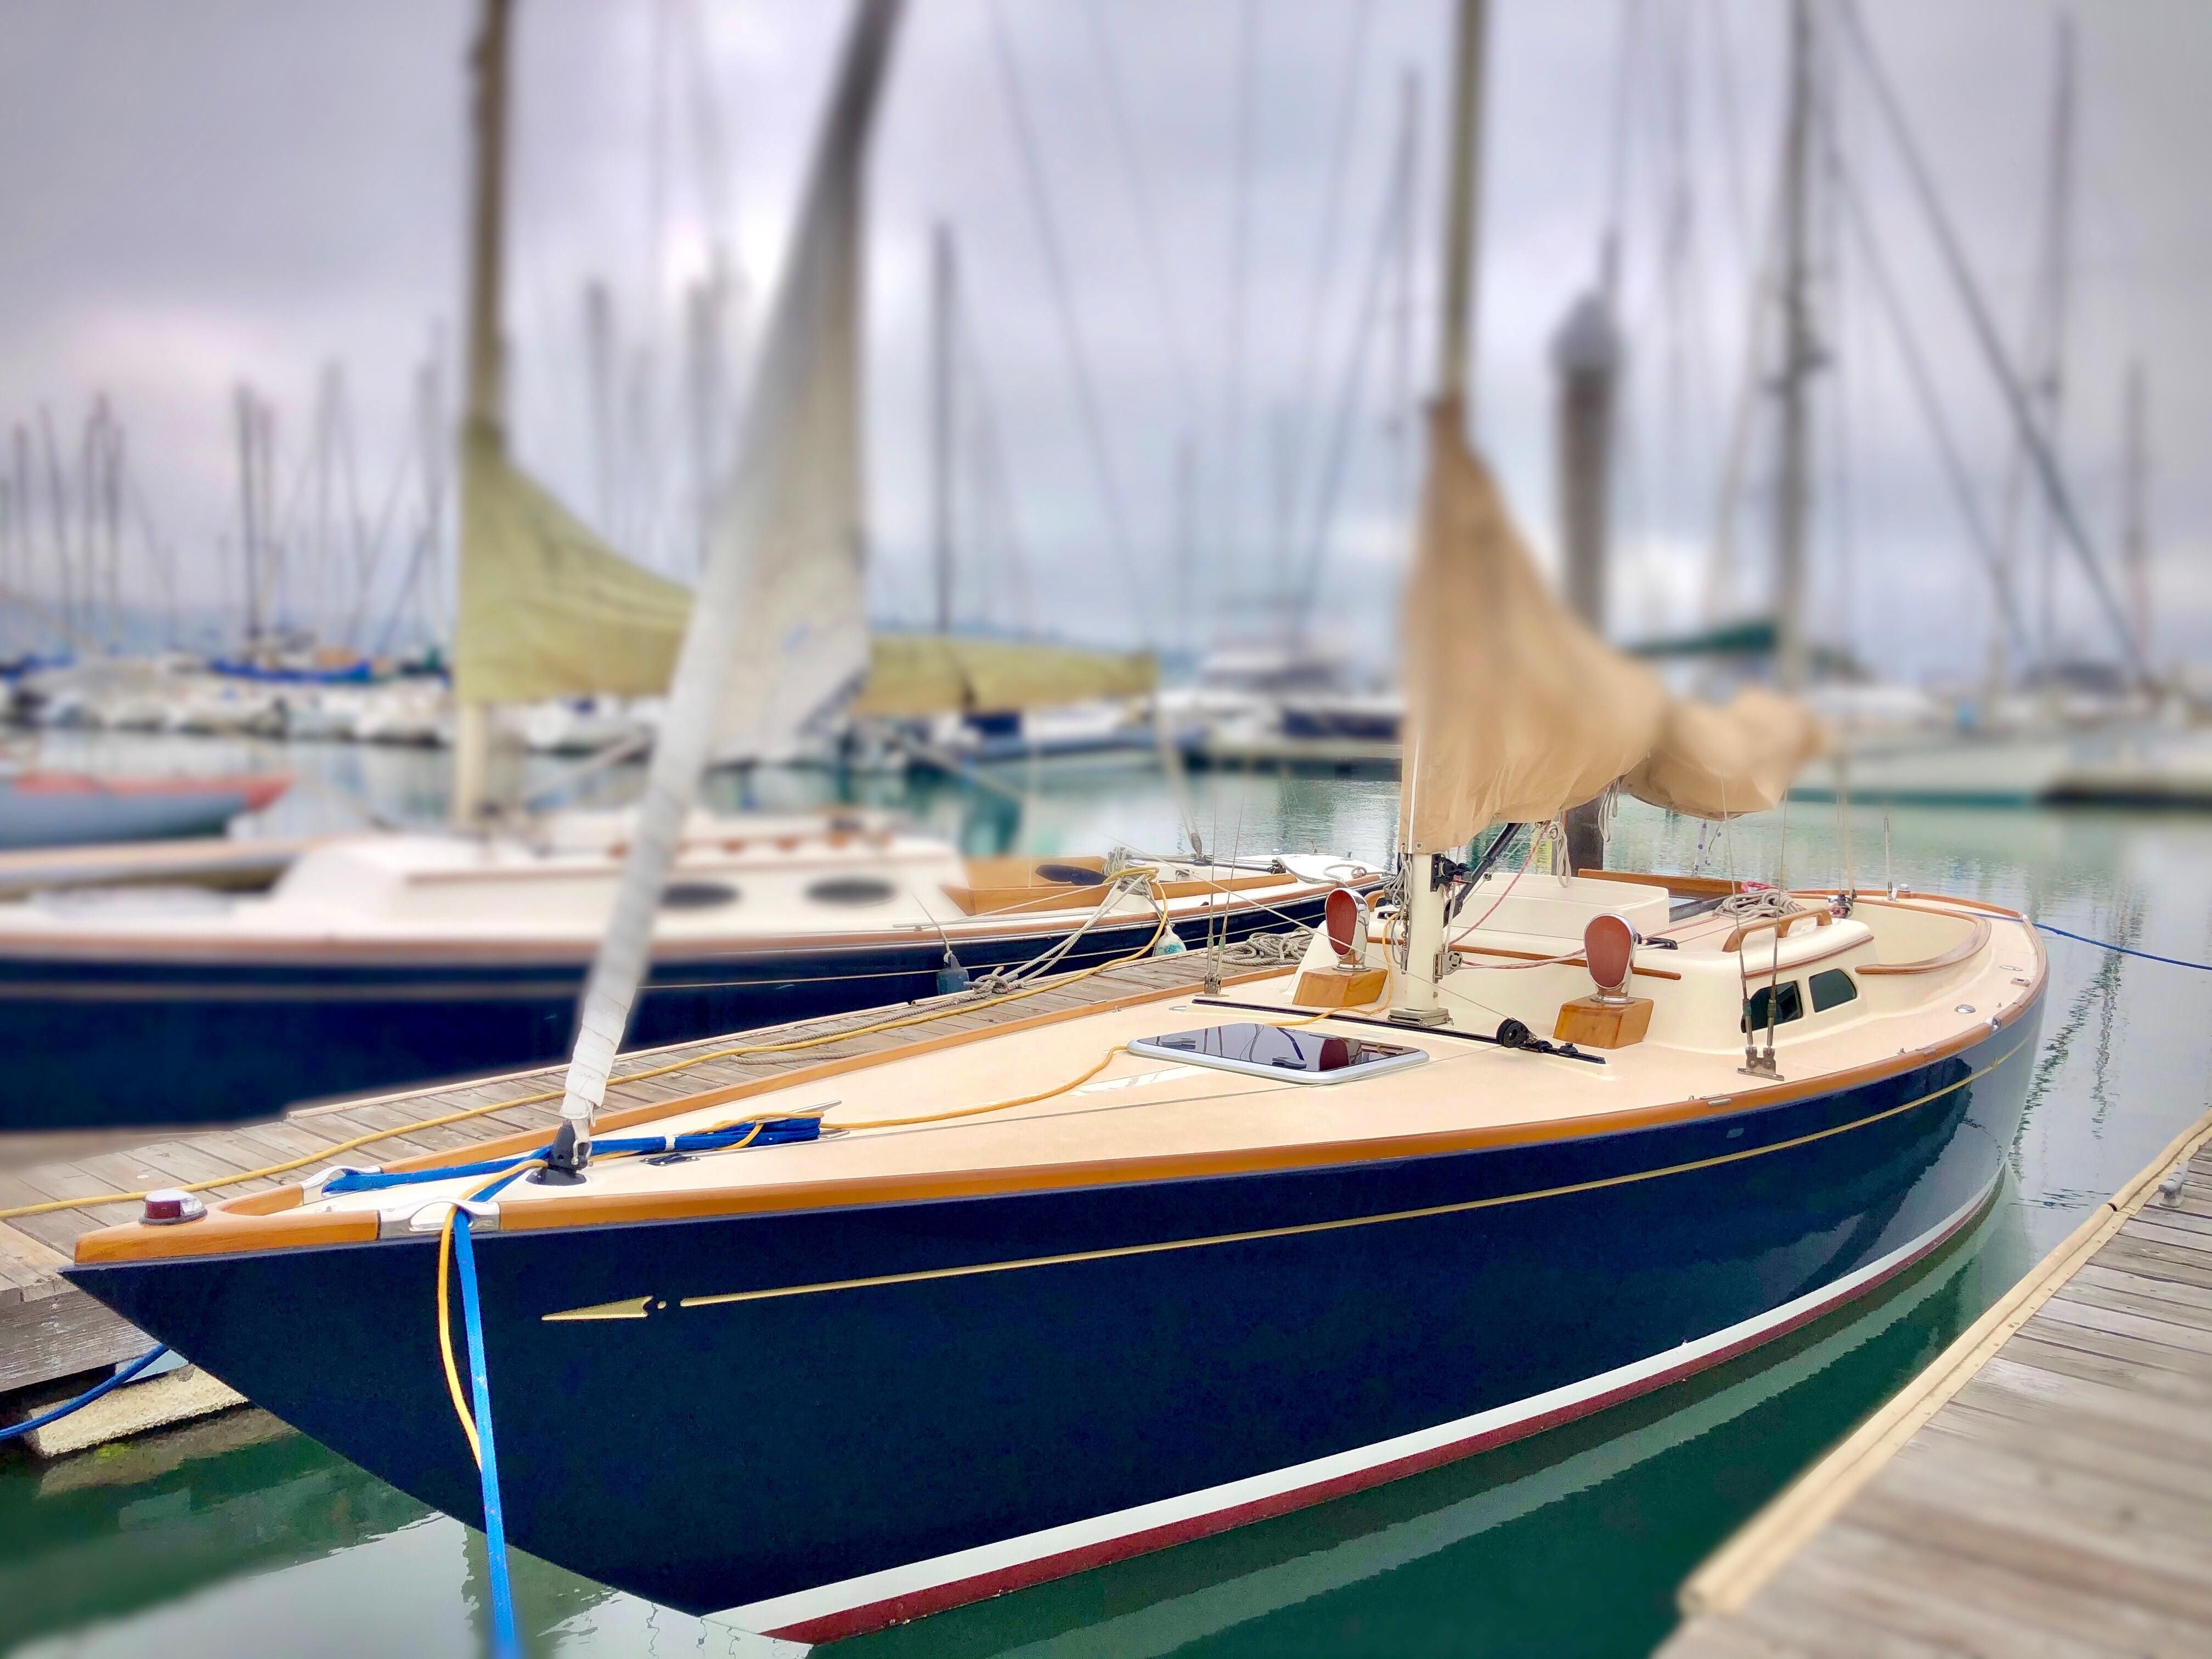 morris yachts m29 for sale